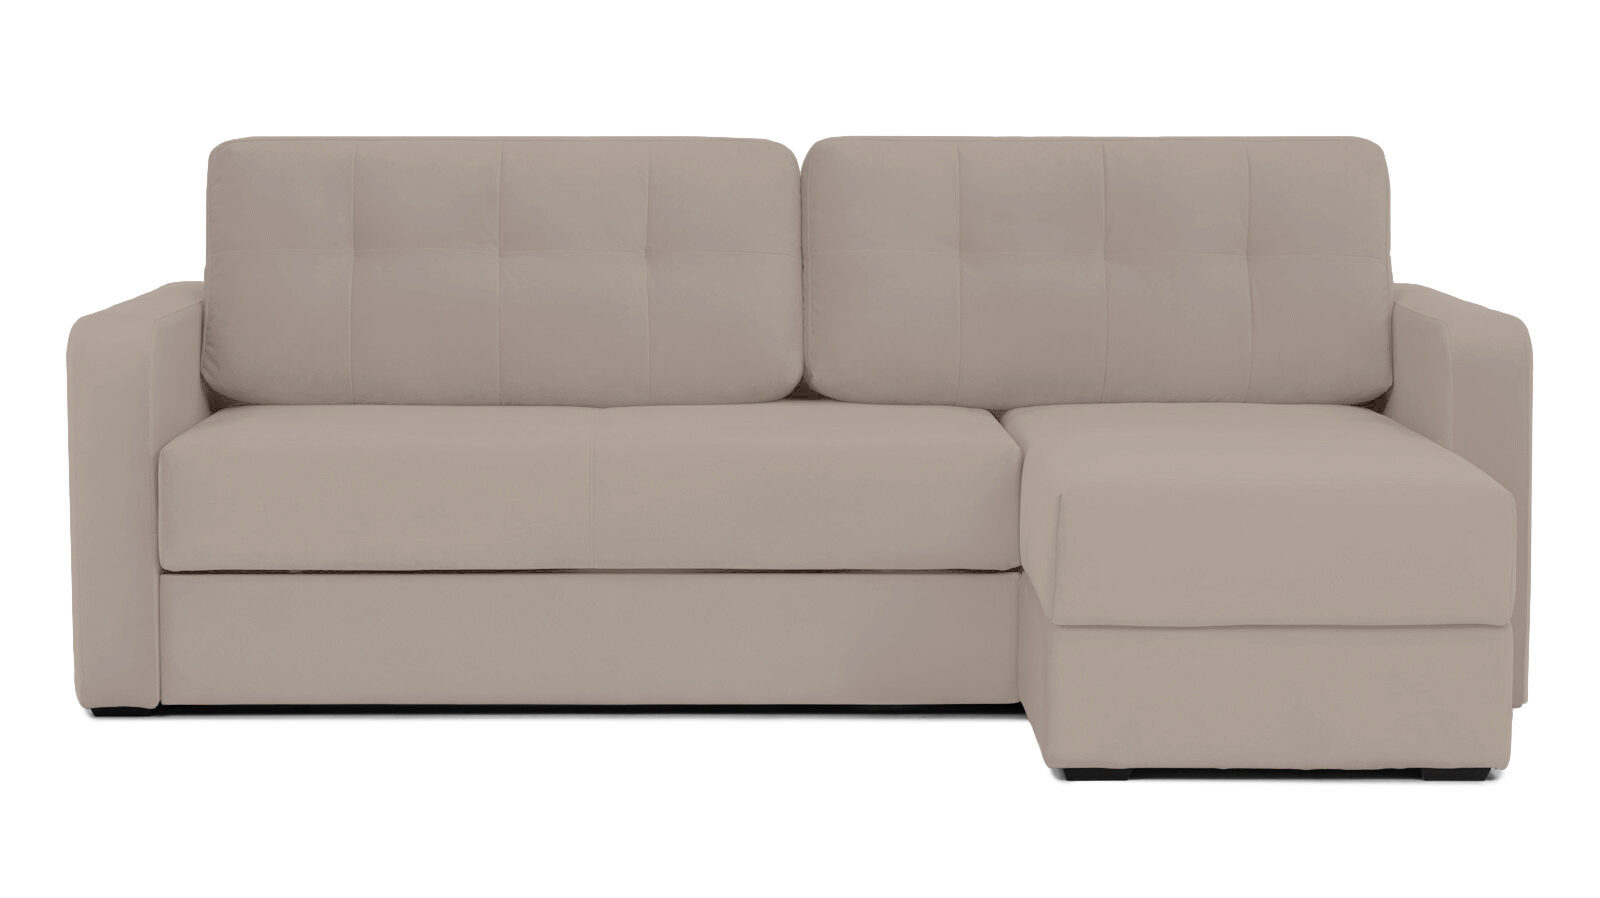 Угловой диван Loko Pro с широкими подлокотниками, с мягким матрасом